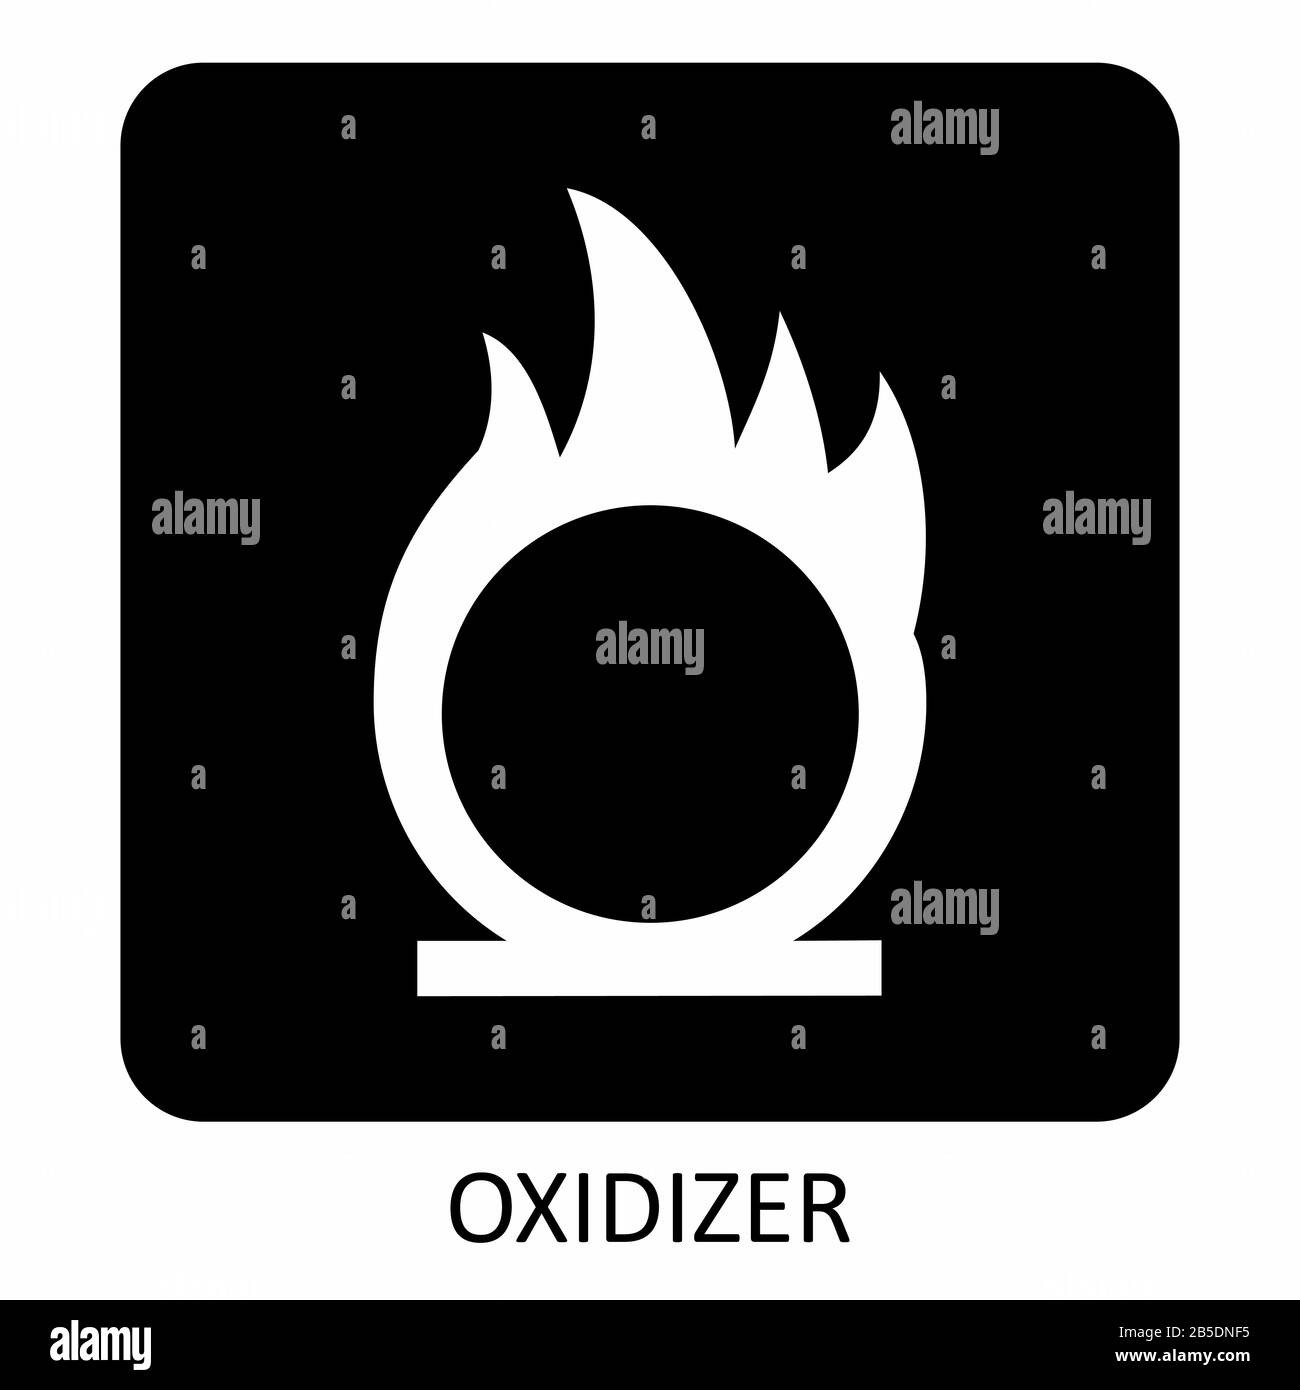 Illustration of oxidizer icon Stock Vector